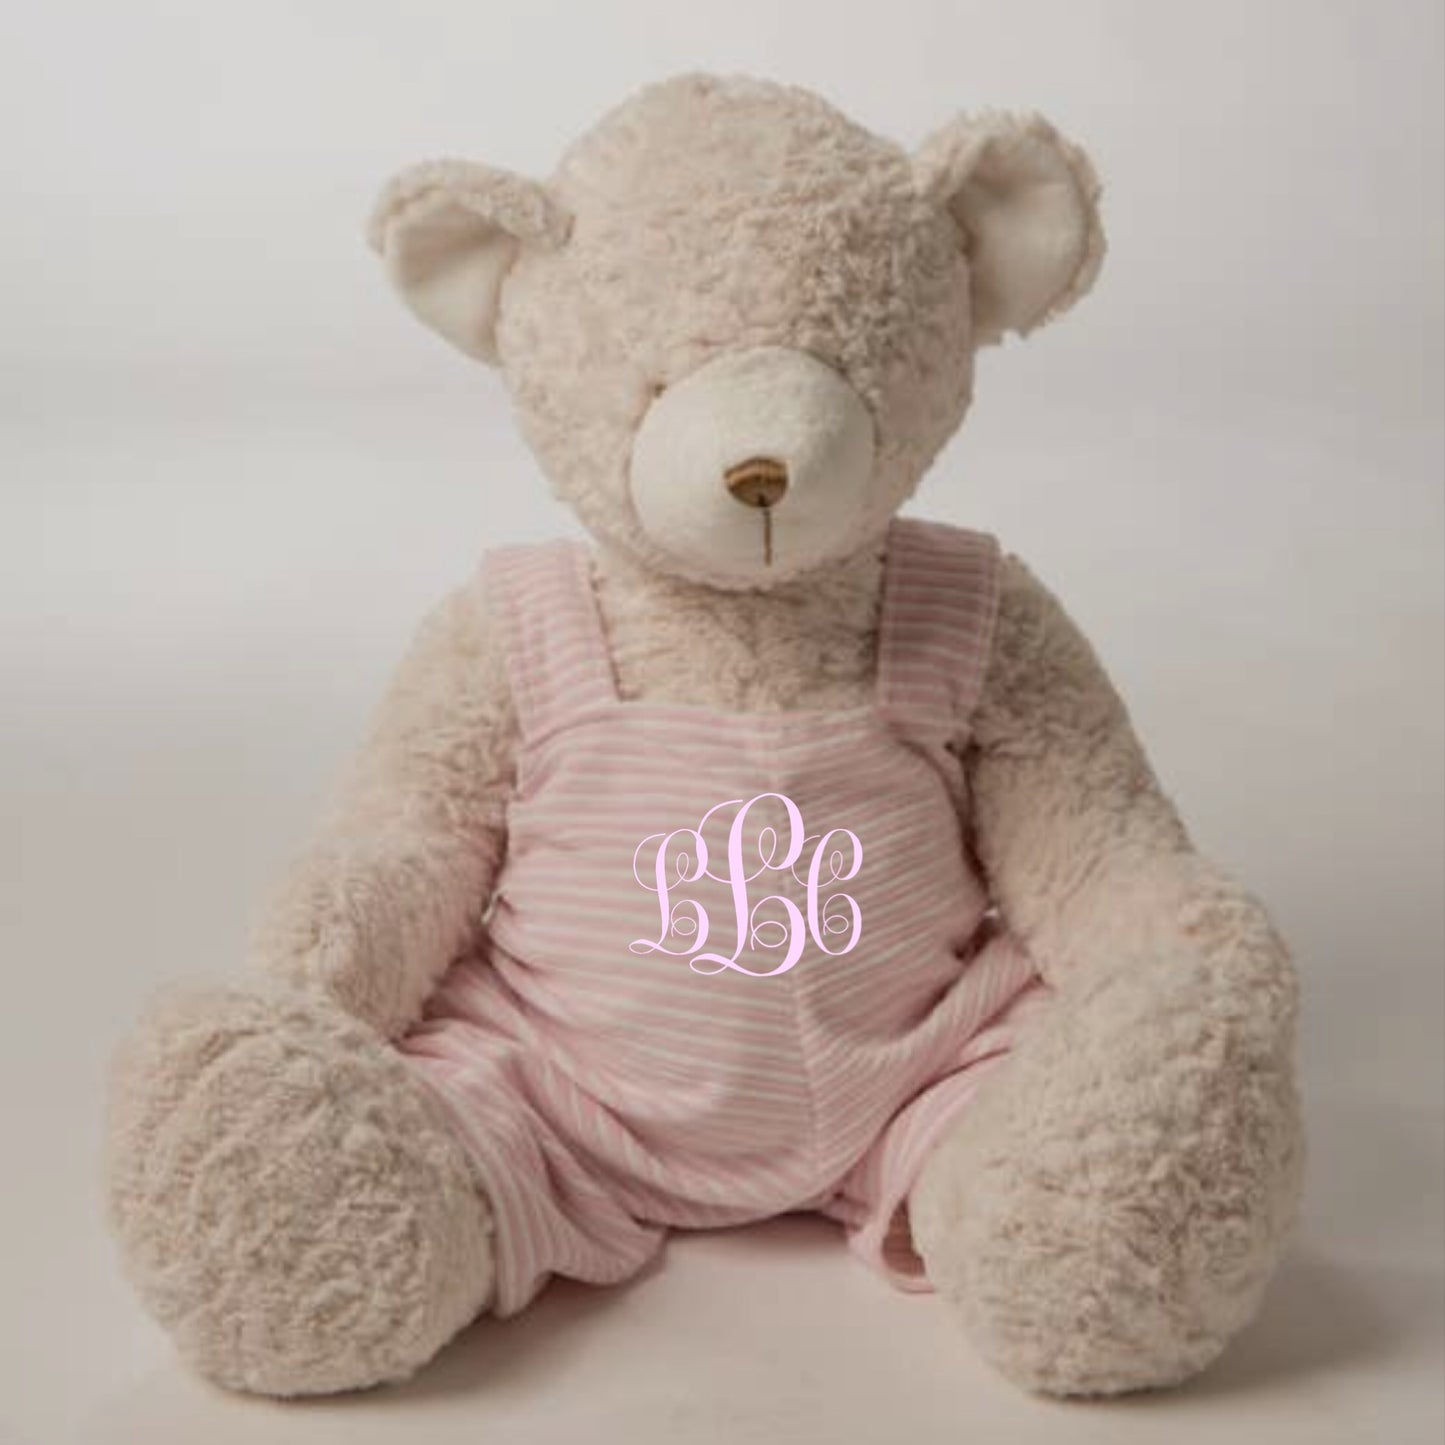 18" Plush Teddy Bear